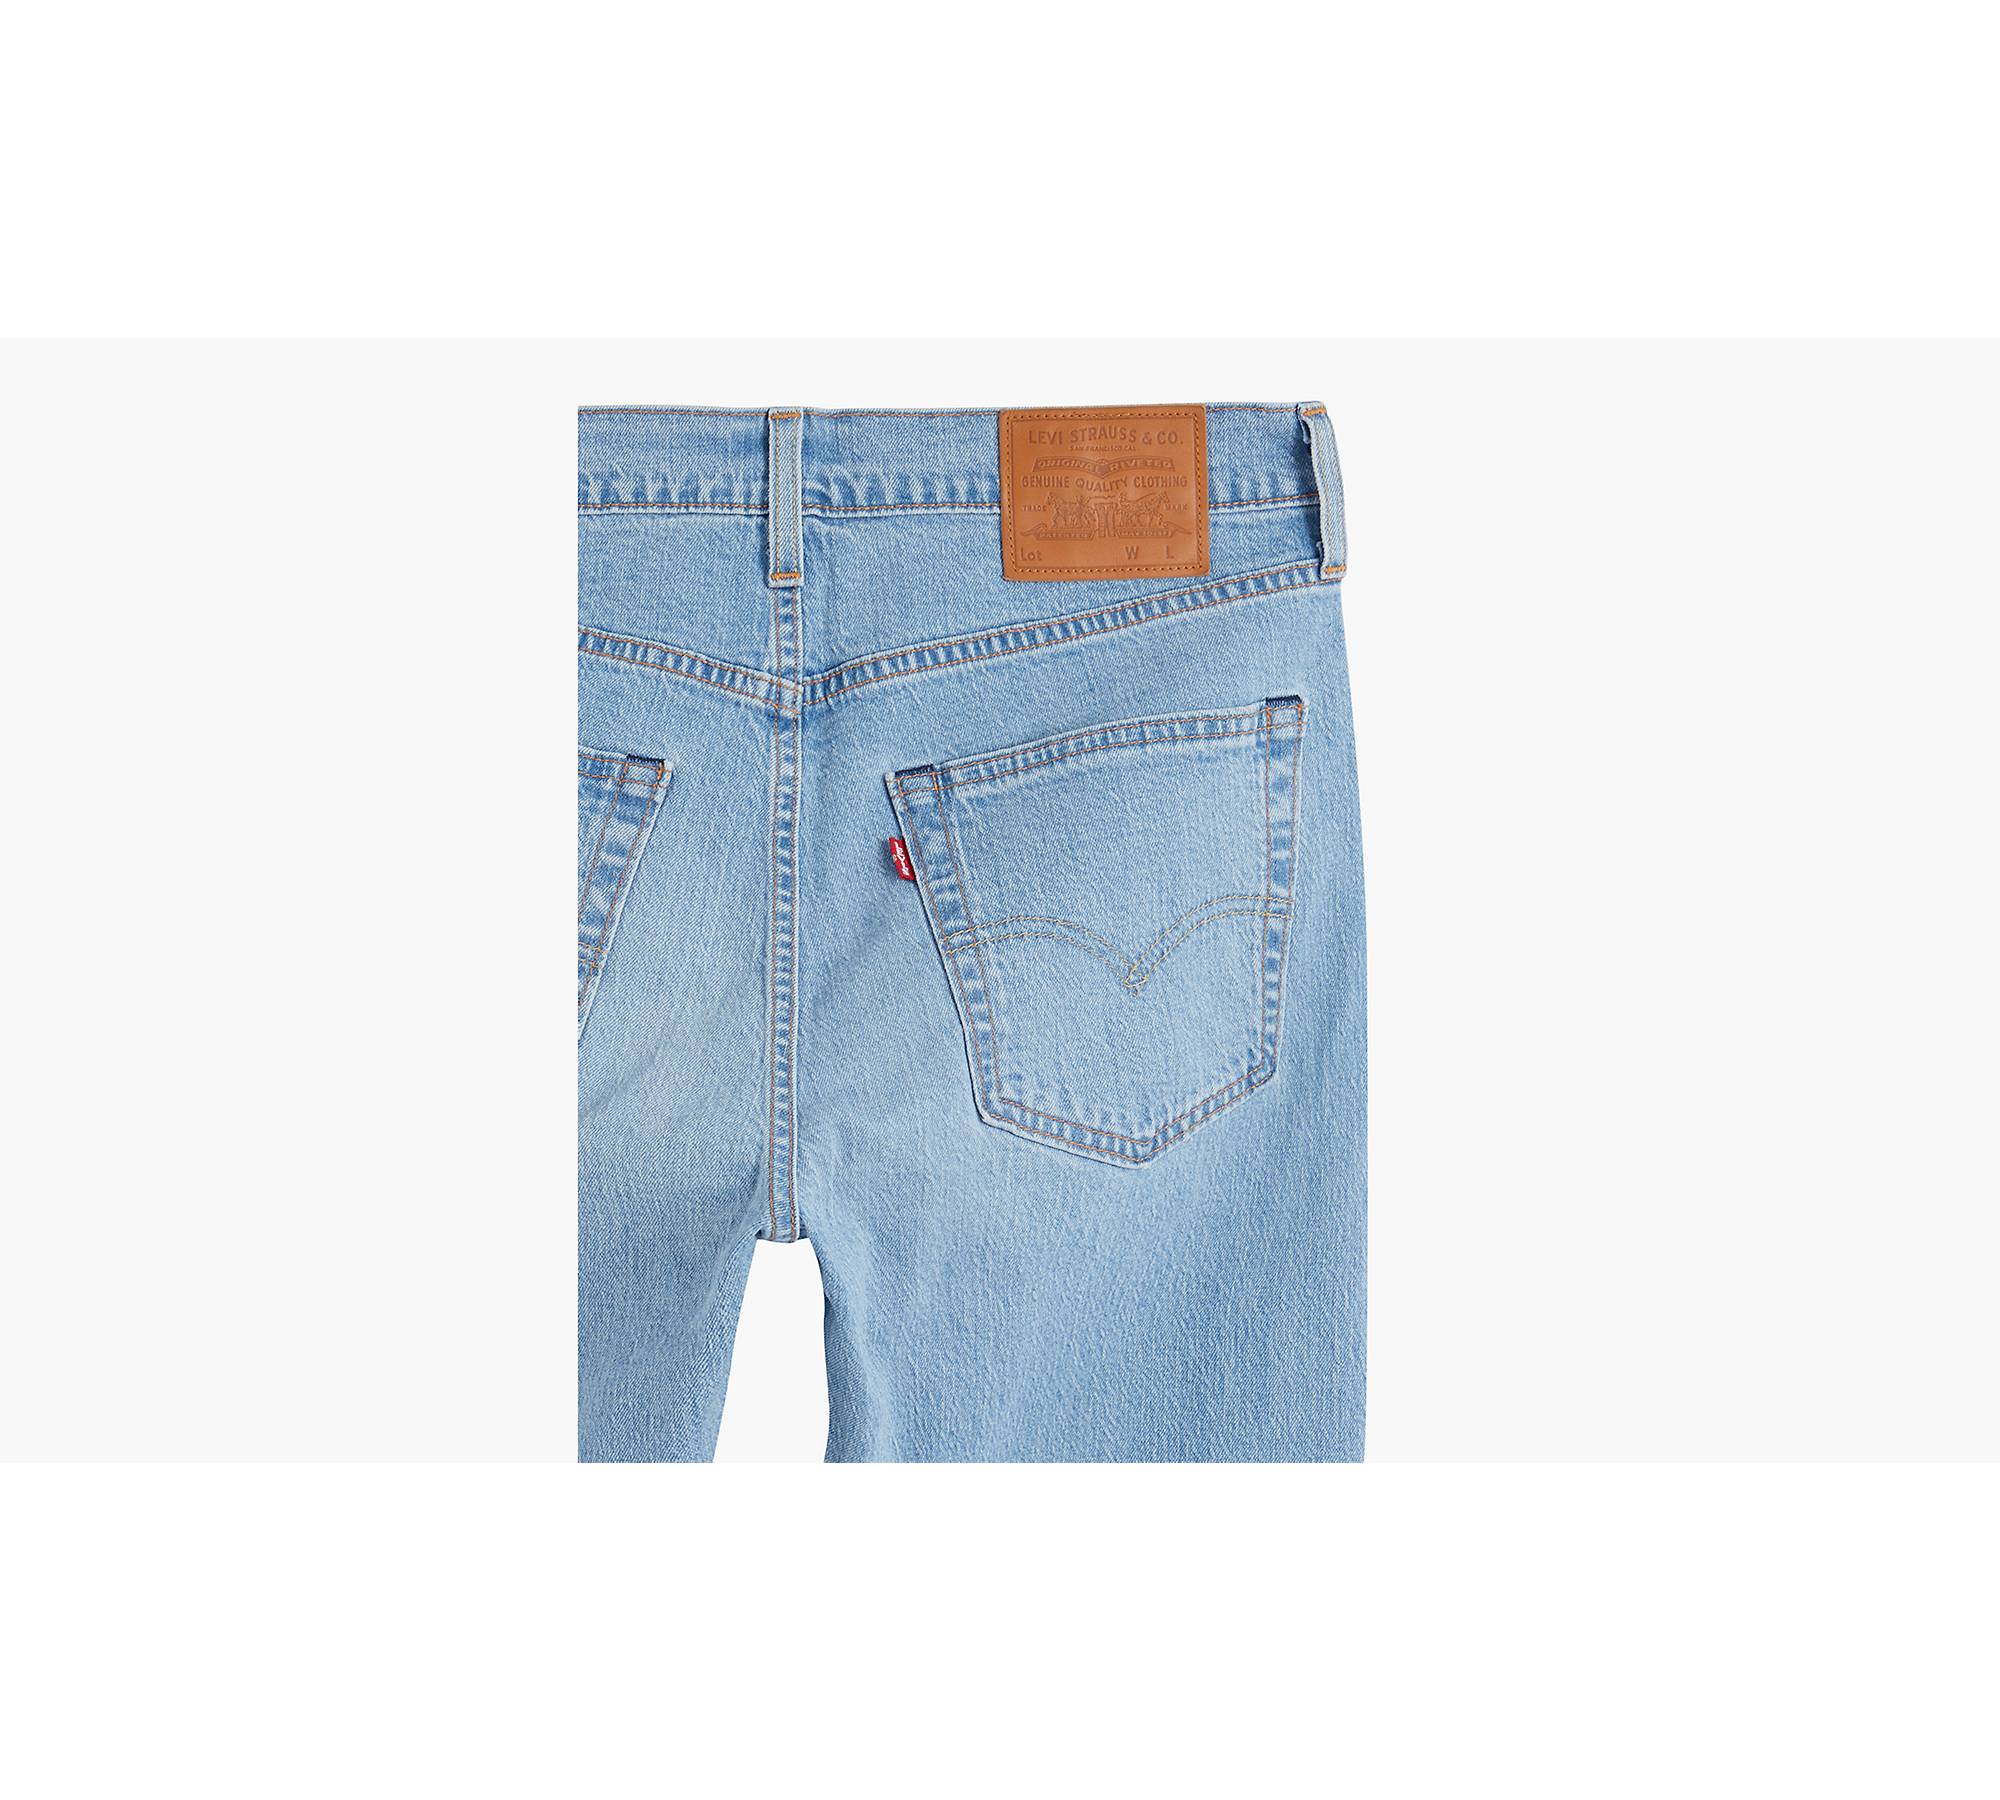 Levis 512 Slim Taper Fit Jeans – urbanindustry2f.co.uk